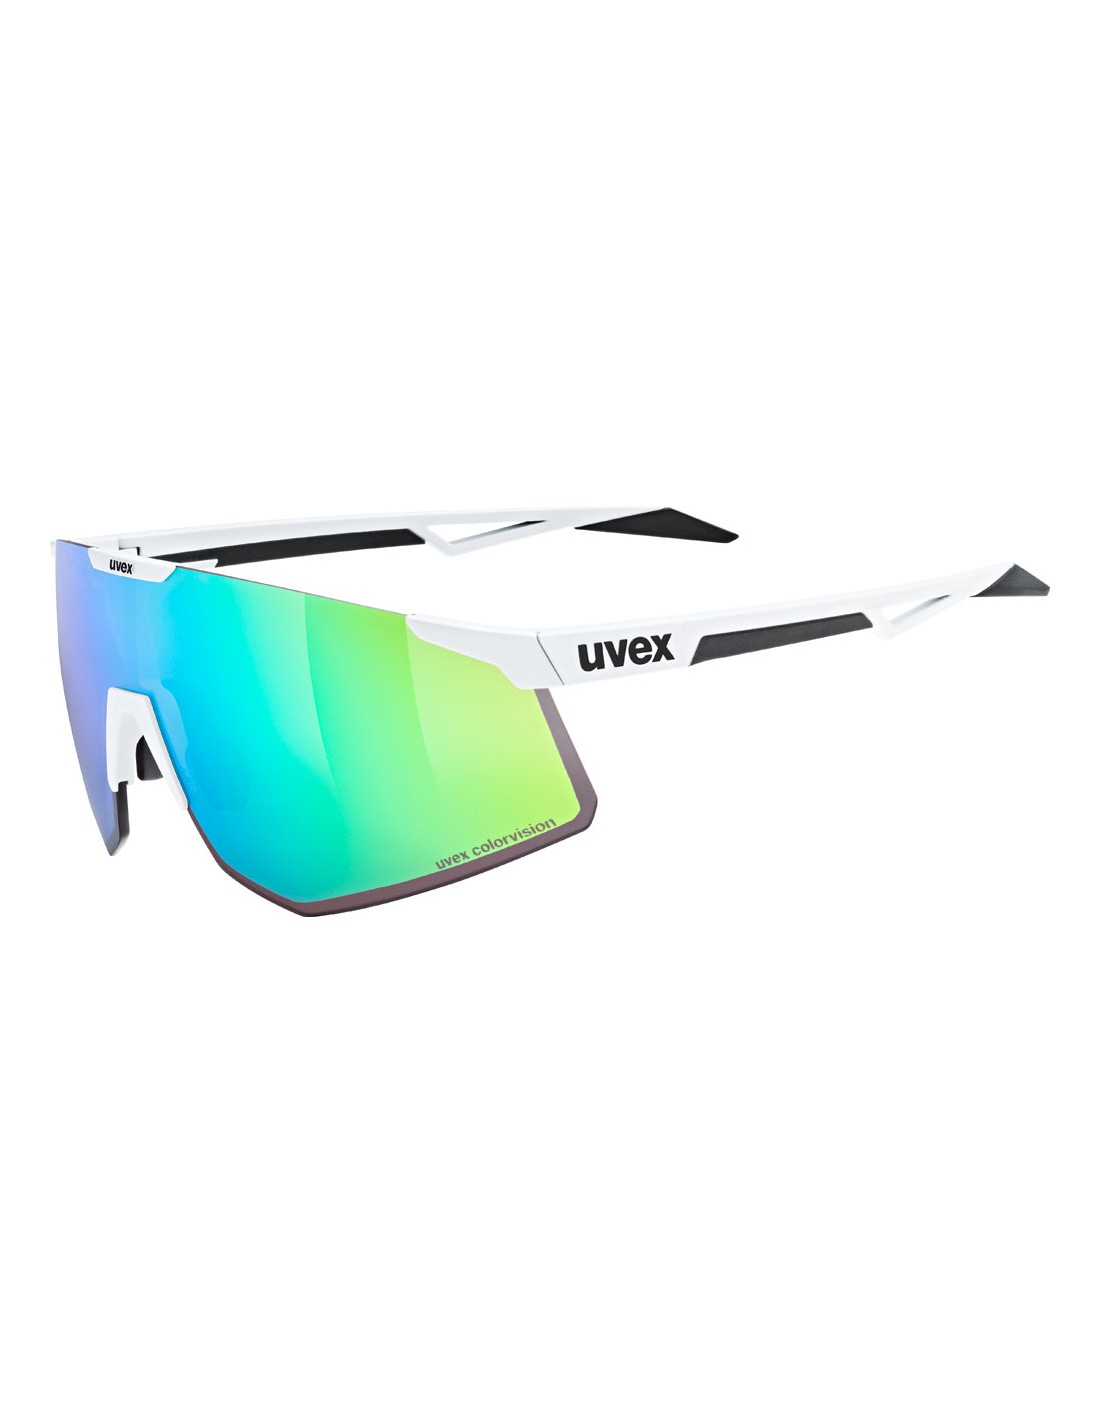 Uvex Sportbrille Pace Perform CV, white matt, uvex colorvision mirror green Cat. 3 glossy green von Uvex